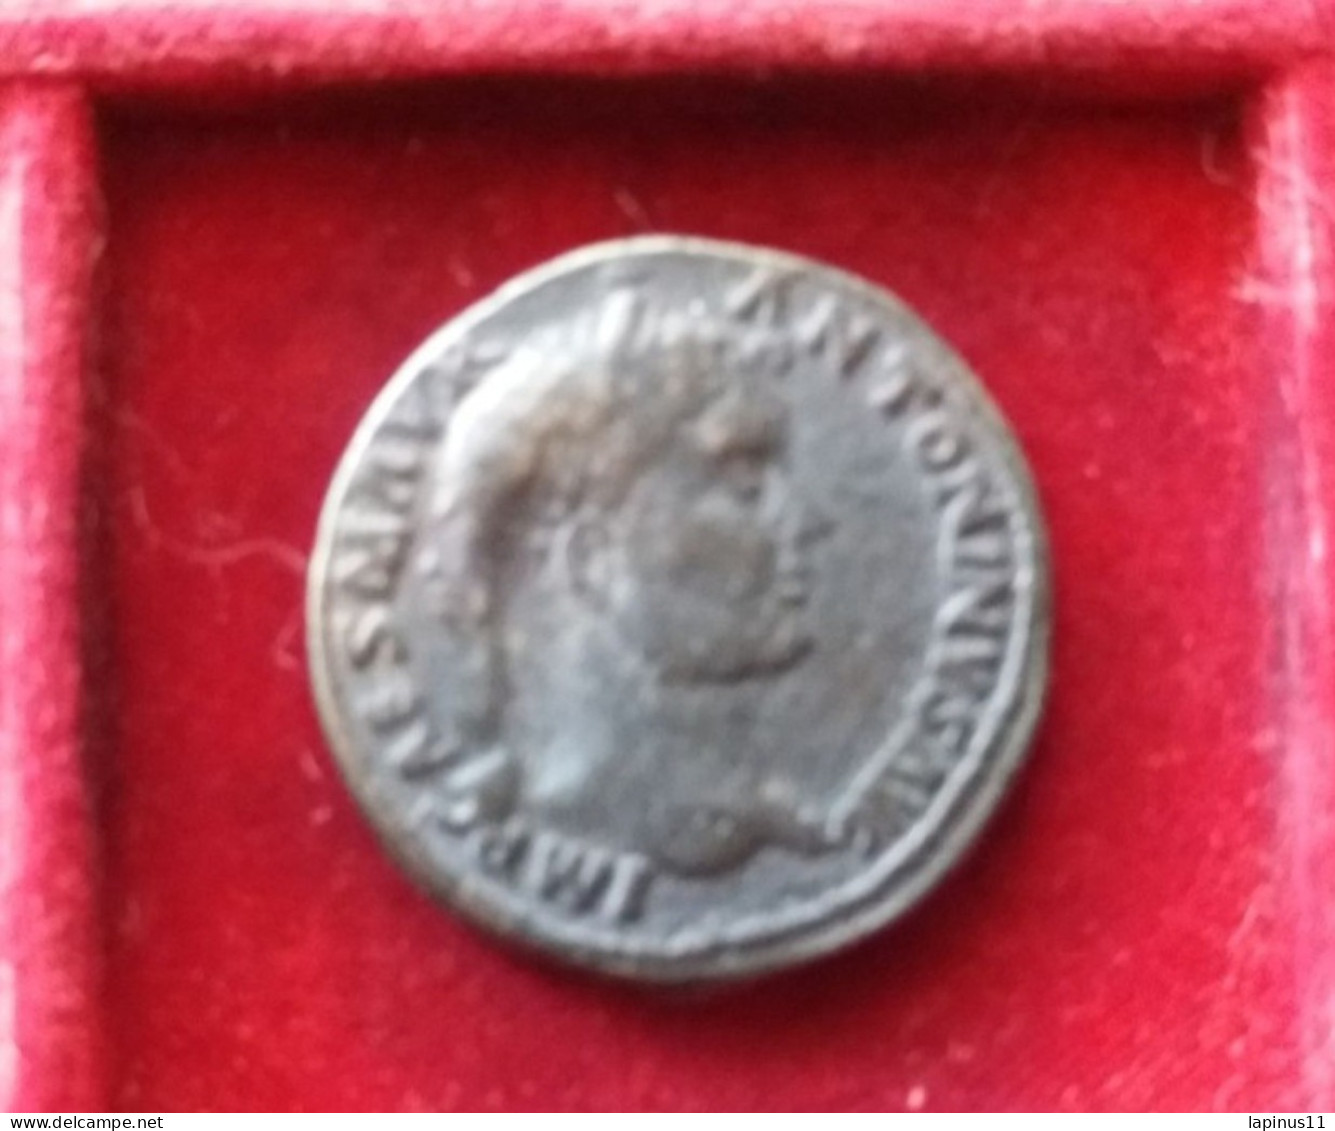 COIN ANCIENT UNCLASSIFIED ROMAN ?GREEK? CELTIC? PHENICIA? BYZANTINE? 3.0 CM DIAMETER 16 G - Byzantine